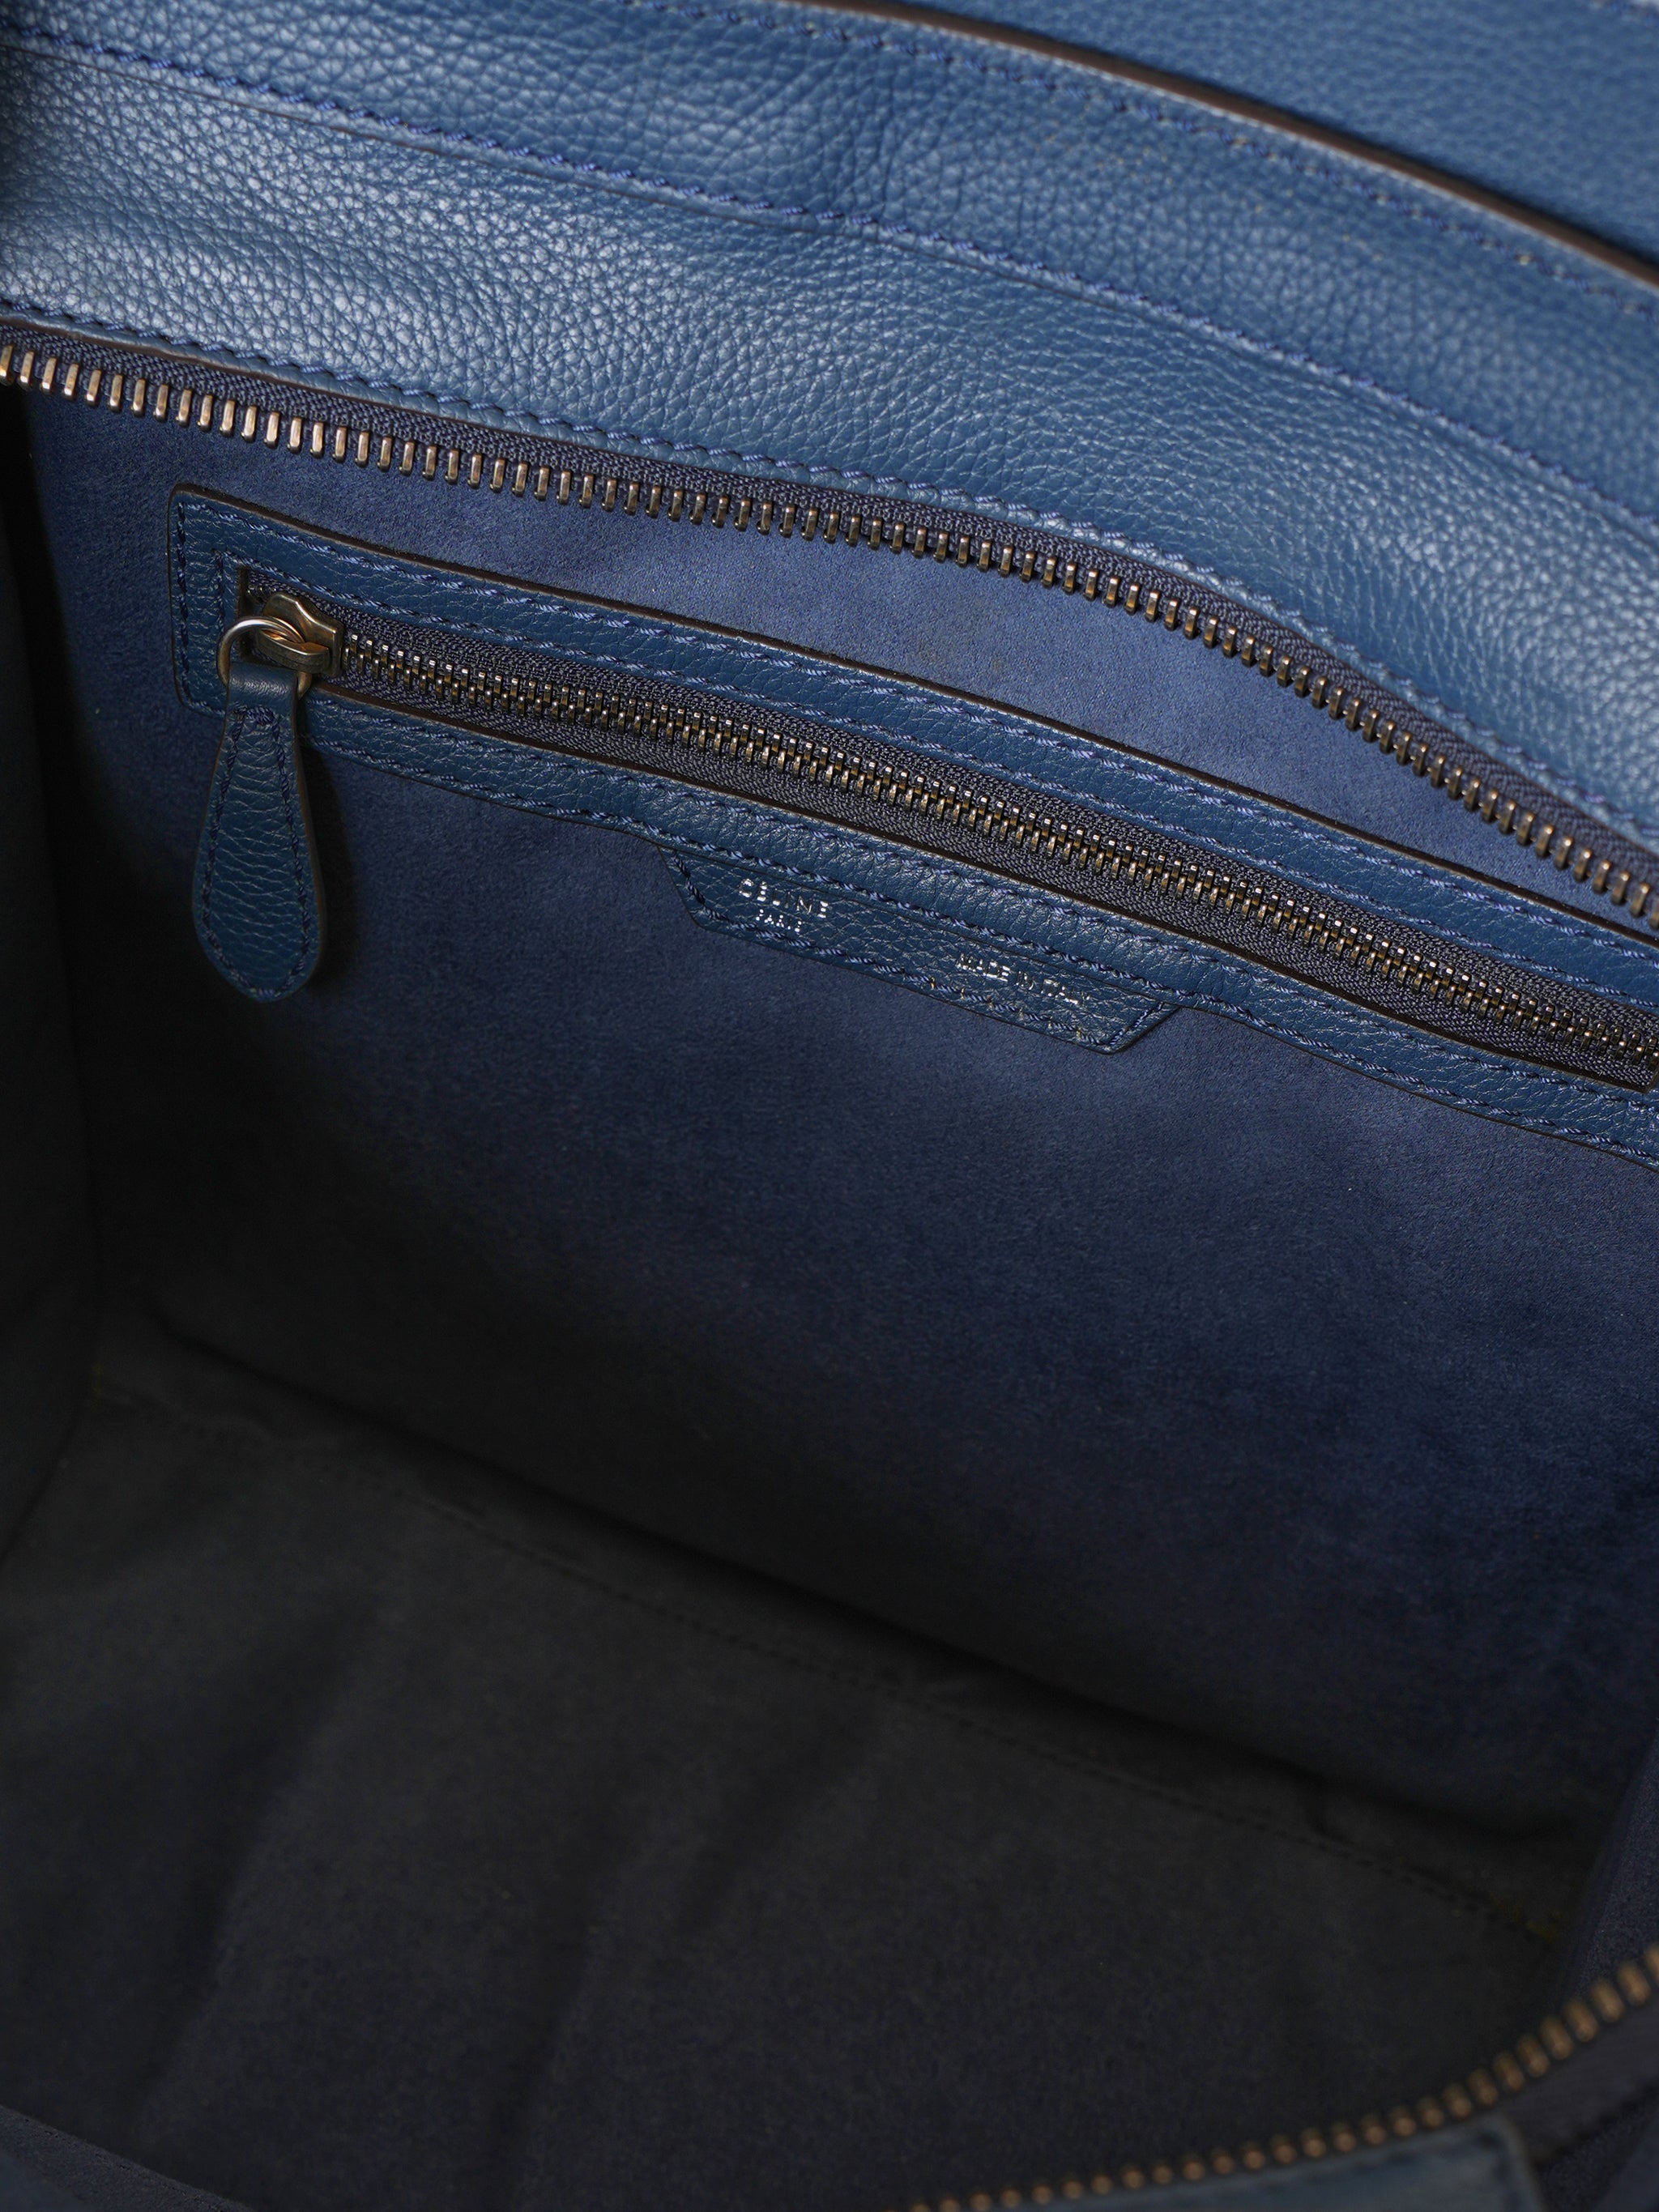 Celine Blue Luggage Leather Hand Bag